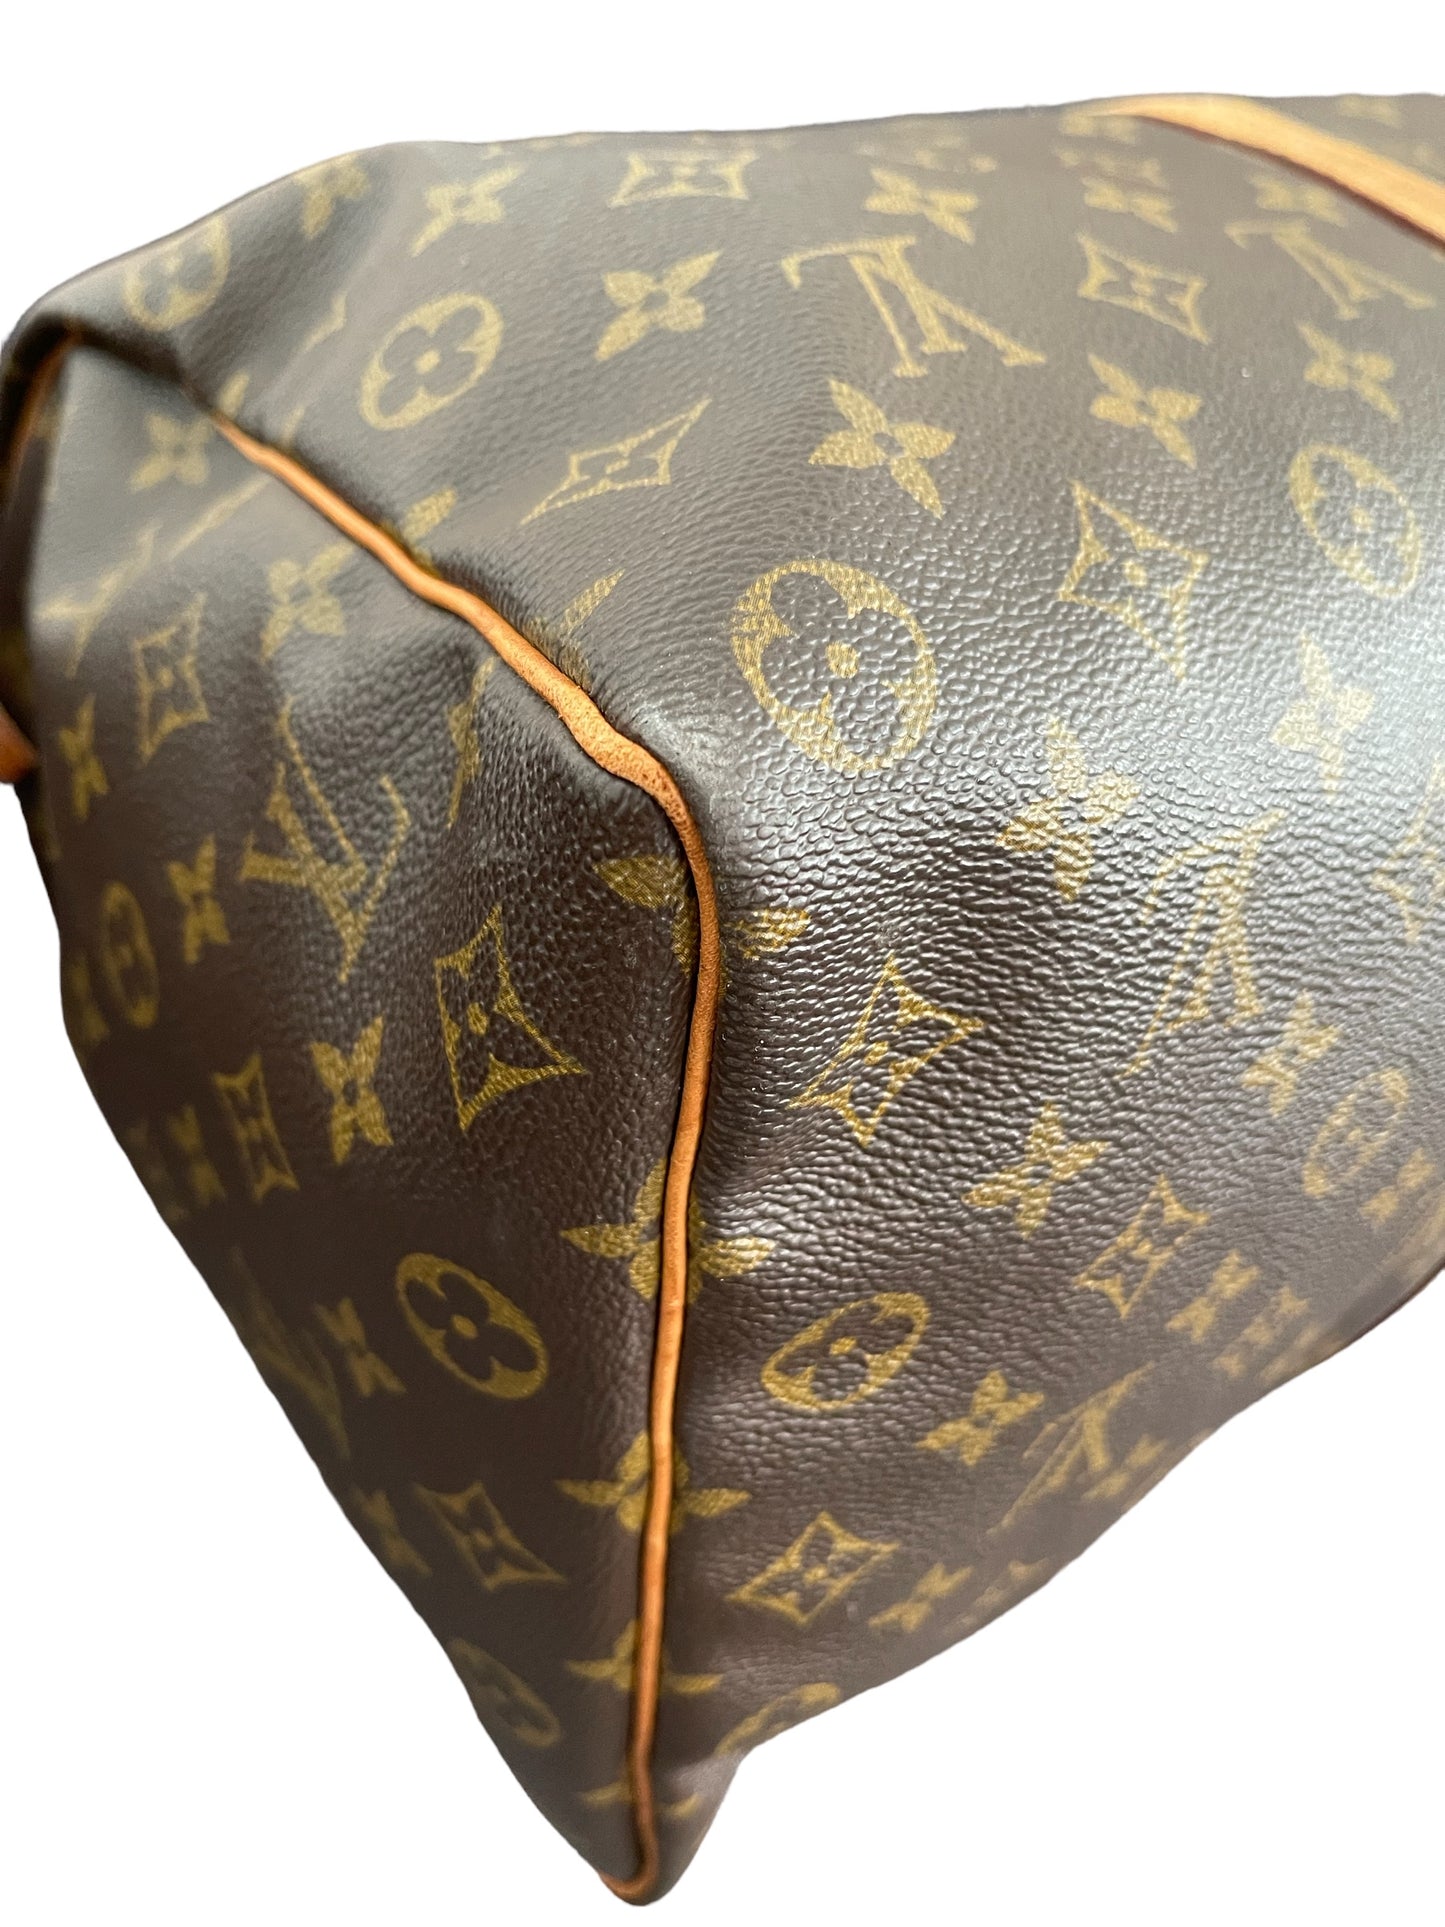 Louis Vuitton Keepall 50 Monogram Travel Bag